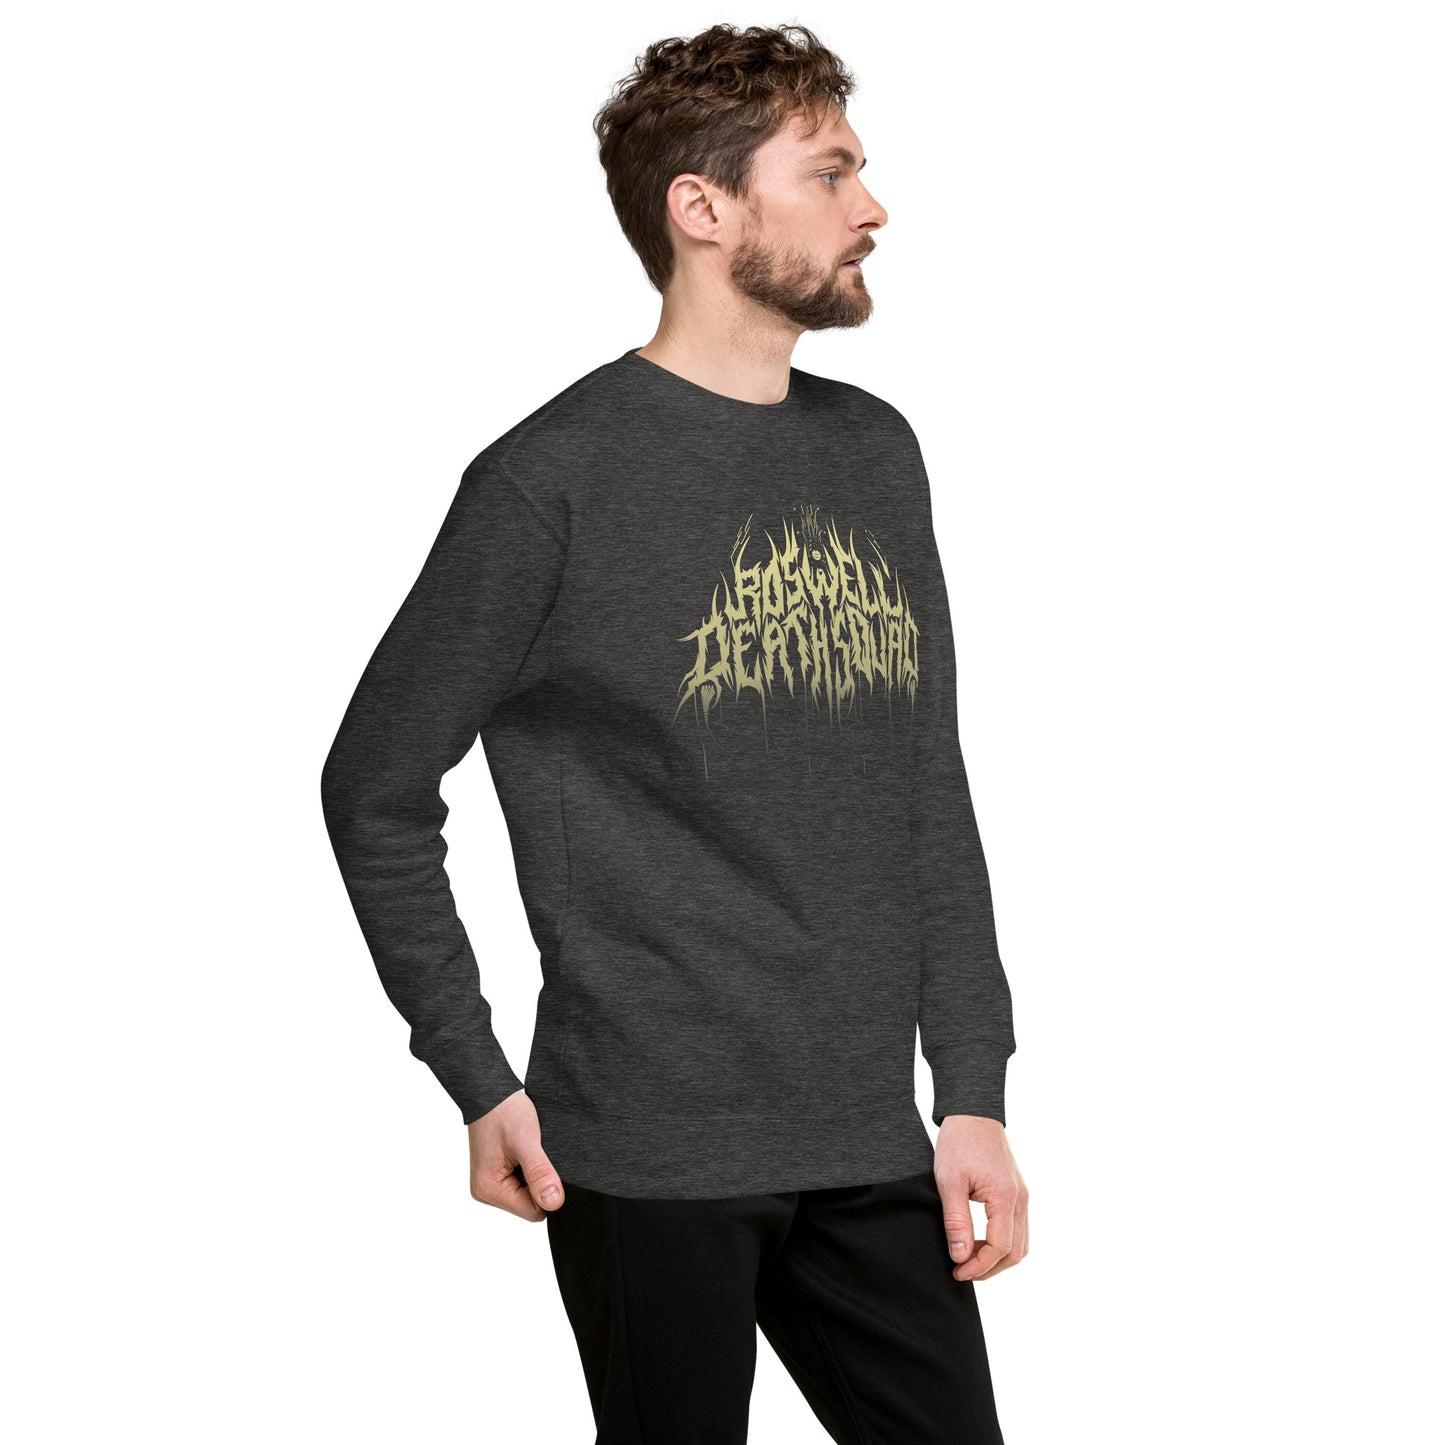 Roswell Deathsquad Unisex Sweatshirt (Gold Edition)